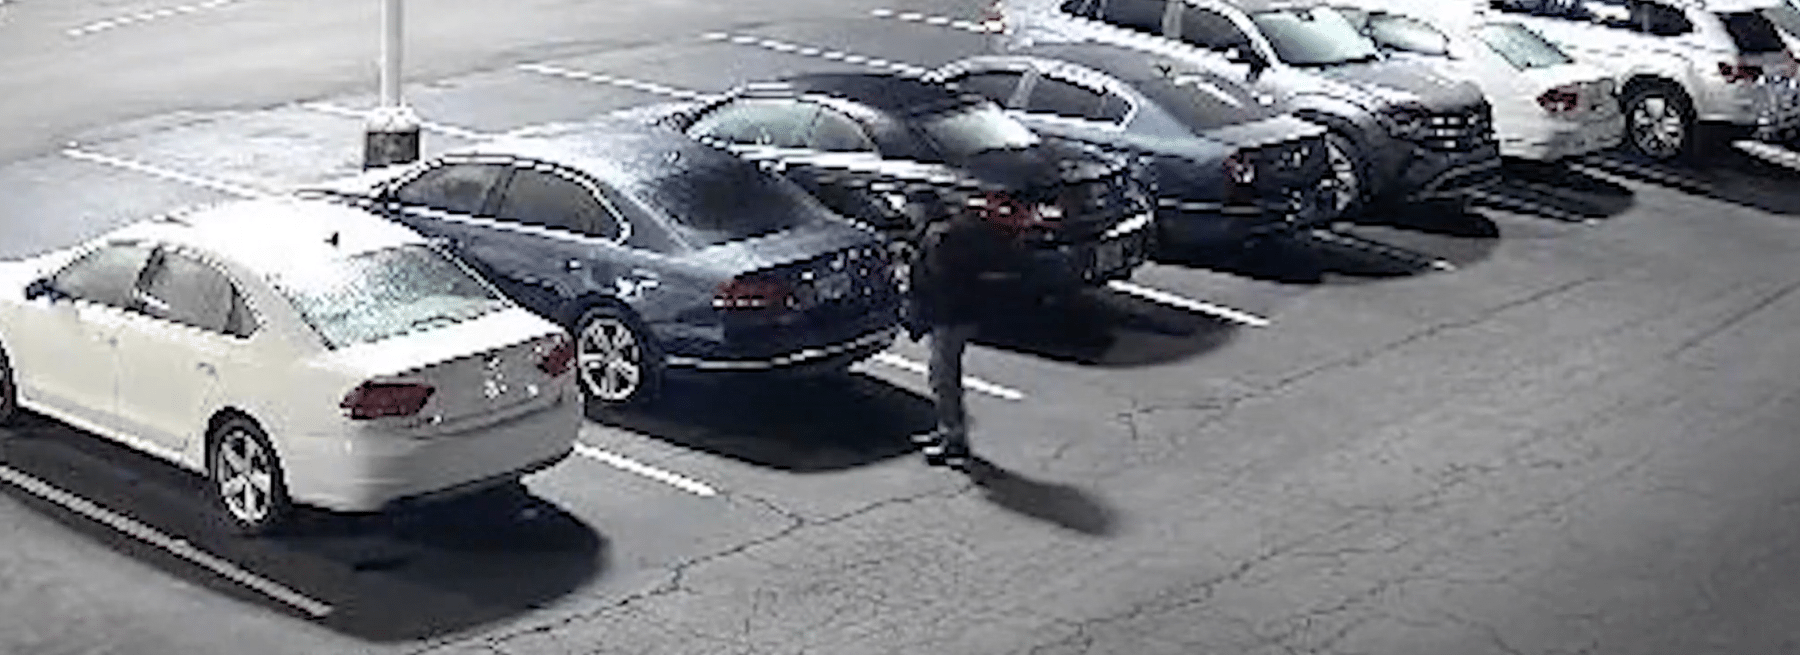 Suspect spotted at South Carolina dealership